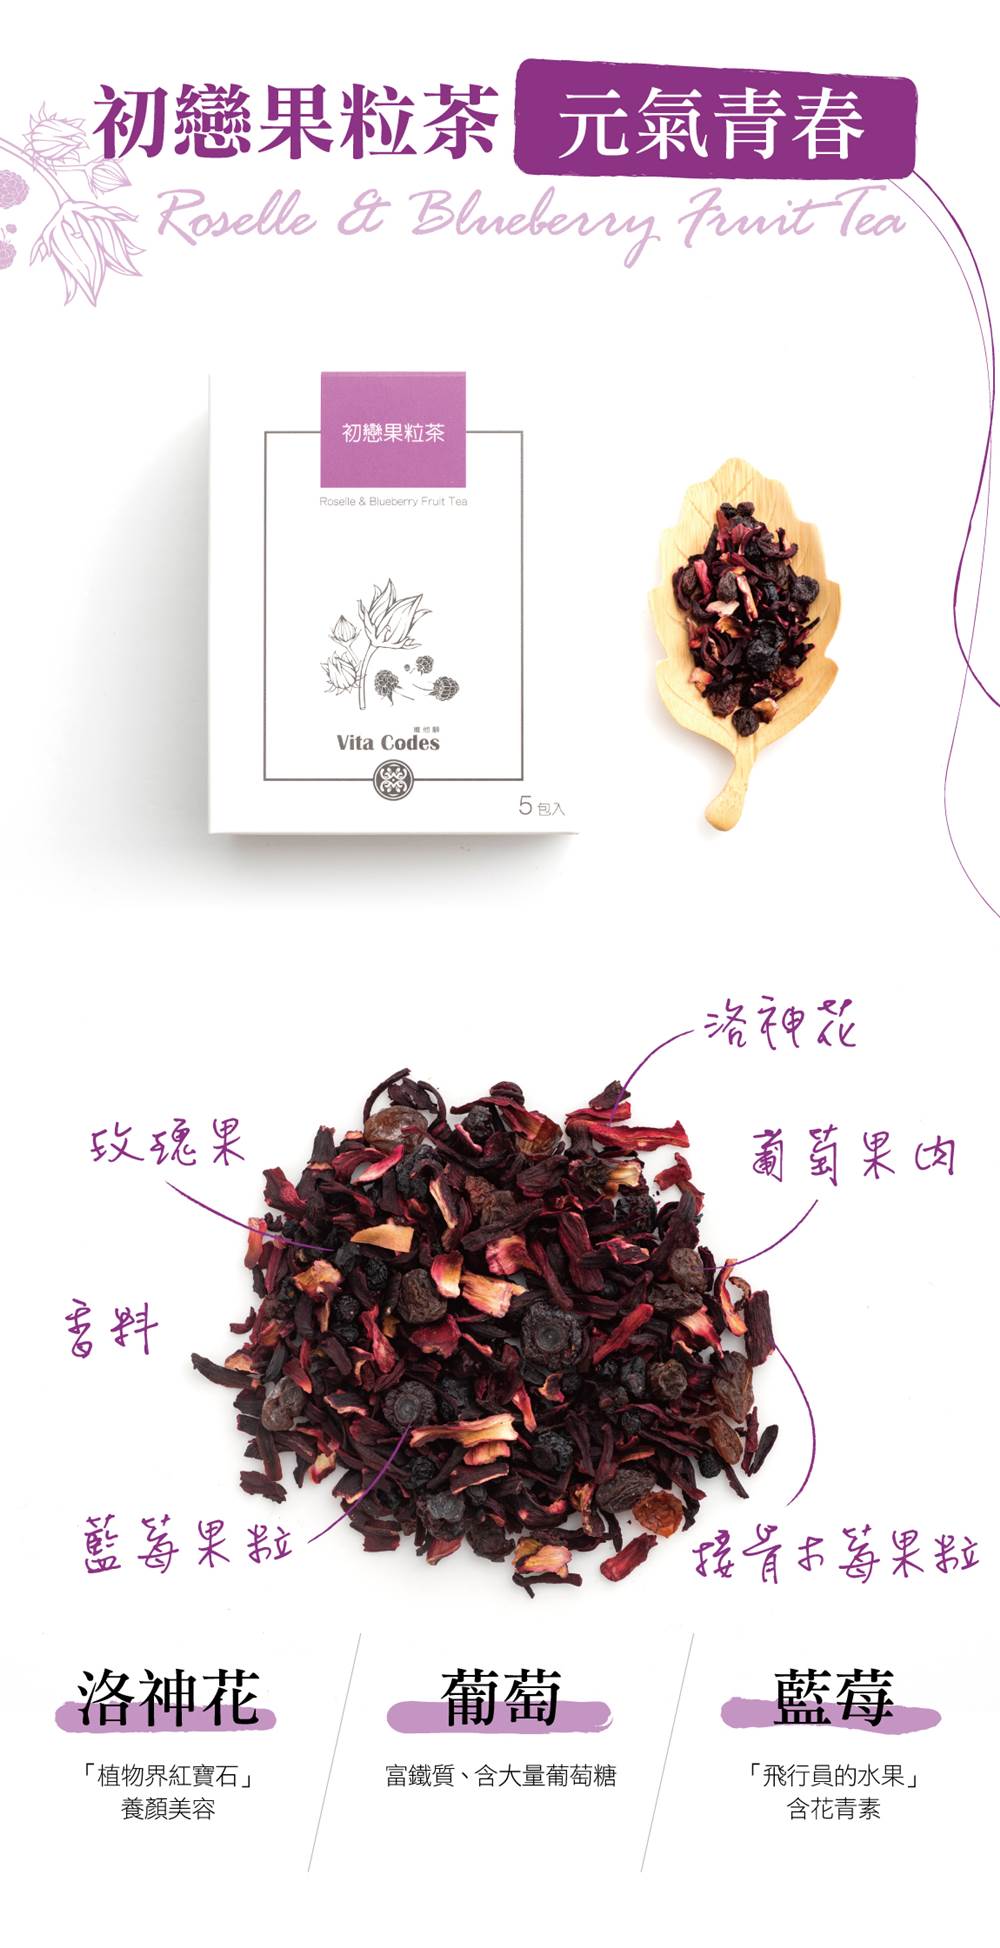 VitaCodes美顏茶-產品介紹05-初戀果粒茶-元氣抗氧